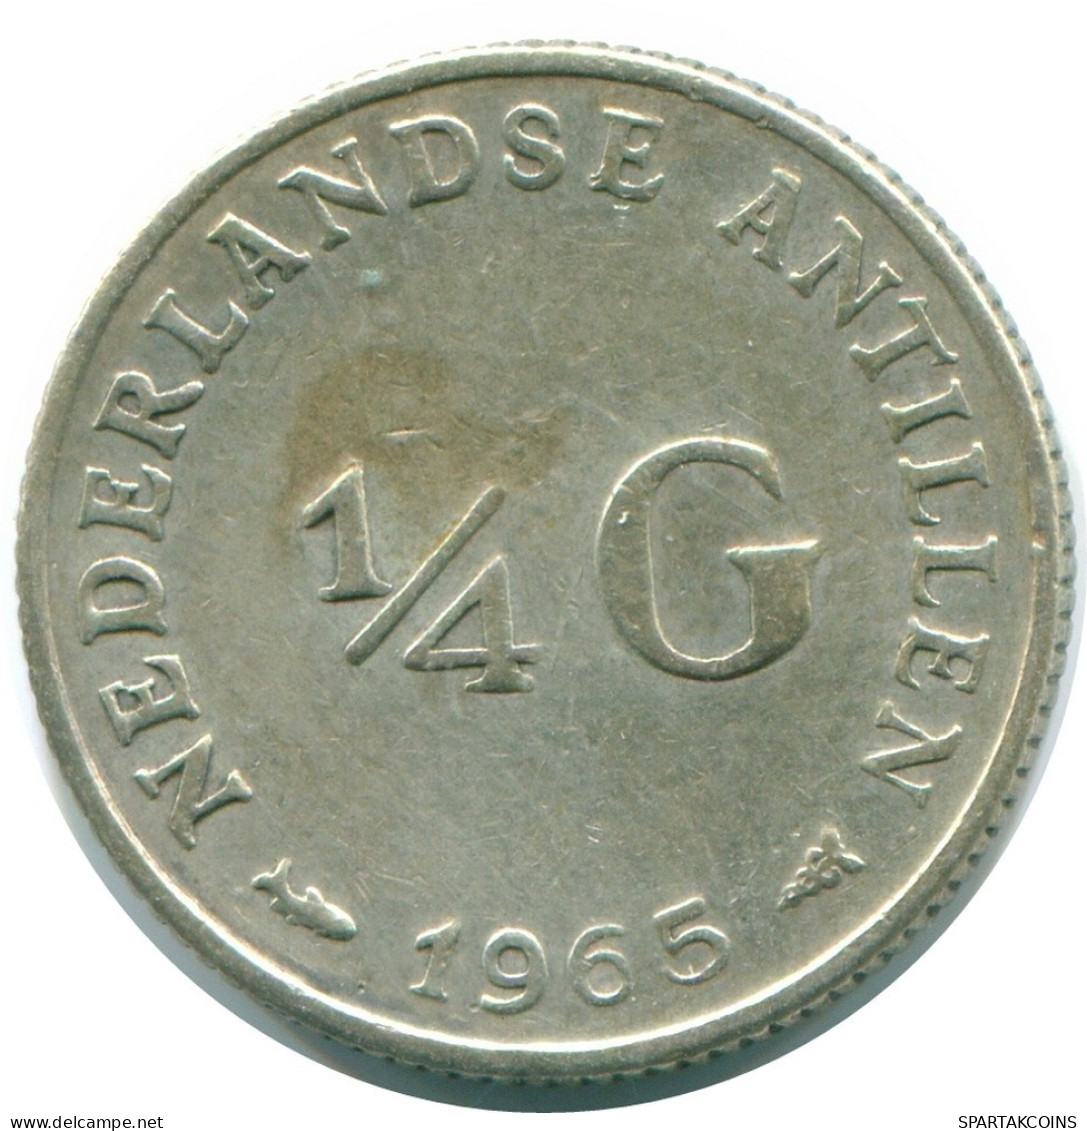 1/4 GULDEN 1965 NETHERLANDS ANTILLES SILVER Colonial Coin #NL11304.4.U.A - Antilles Néerlandaises